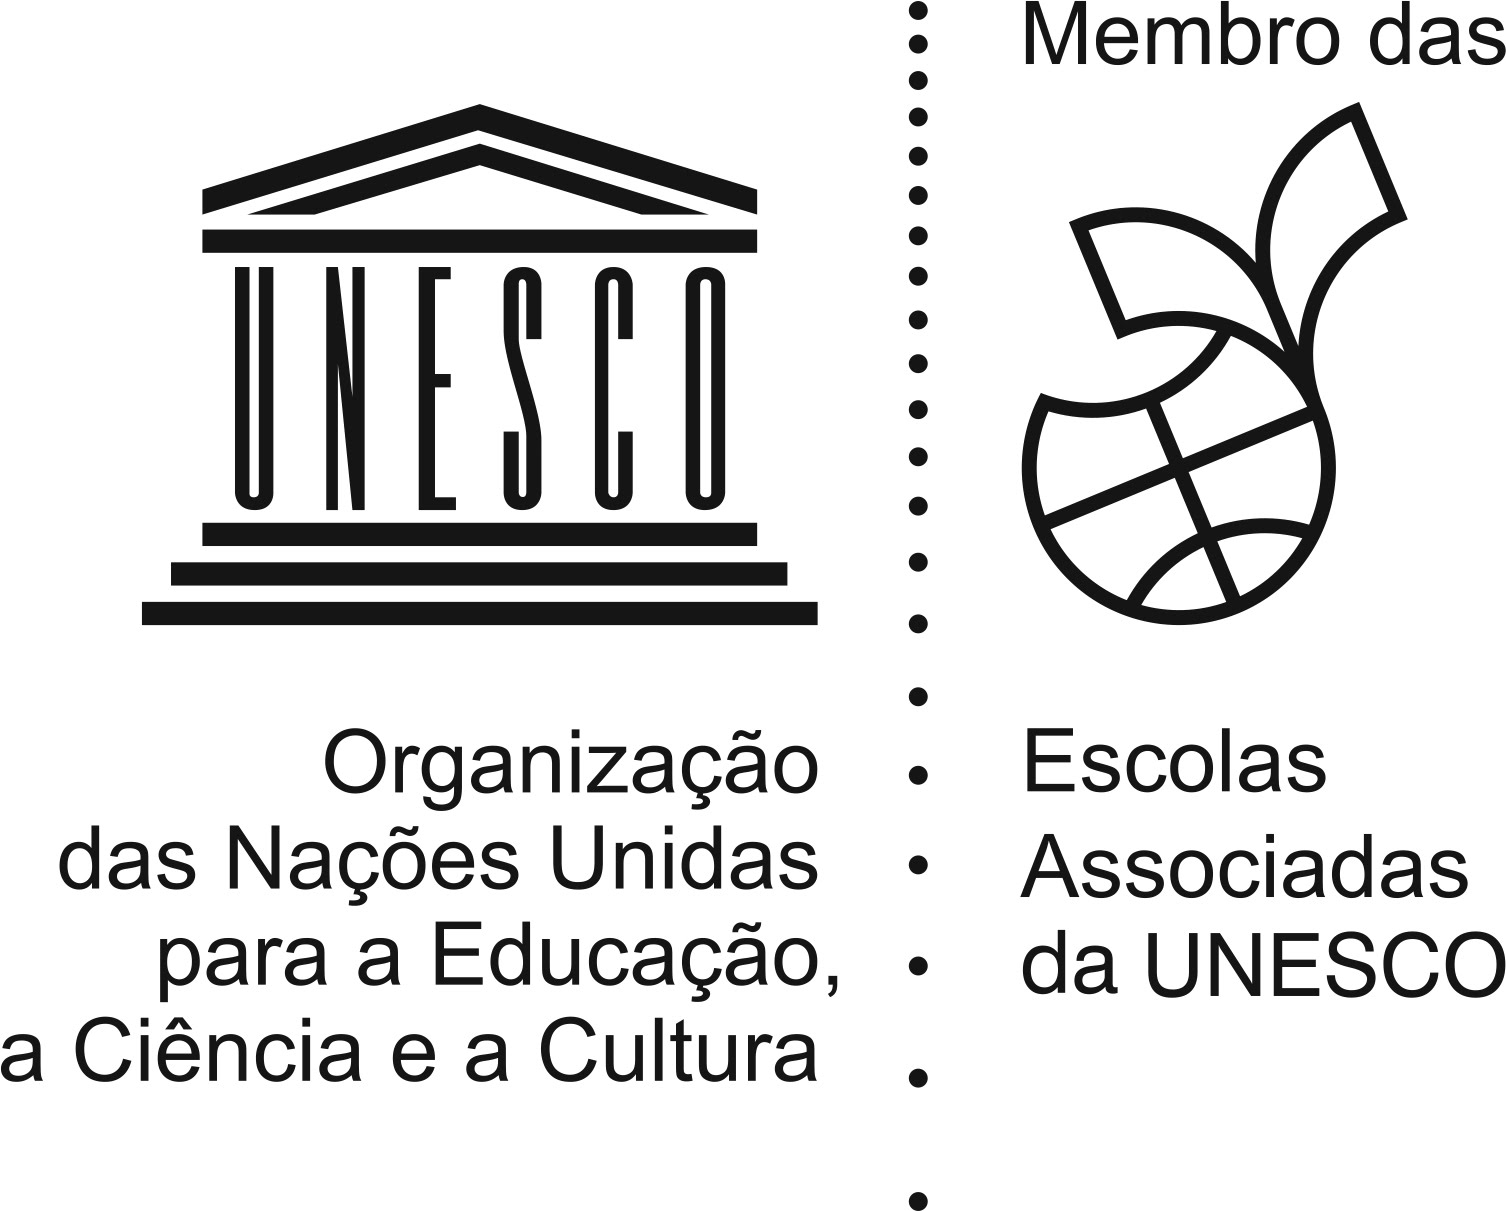 Membro das Escolas Associadas da UNESCO